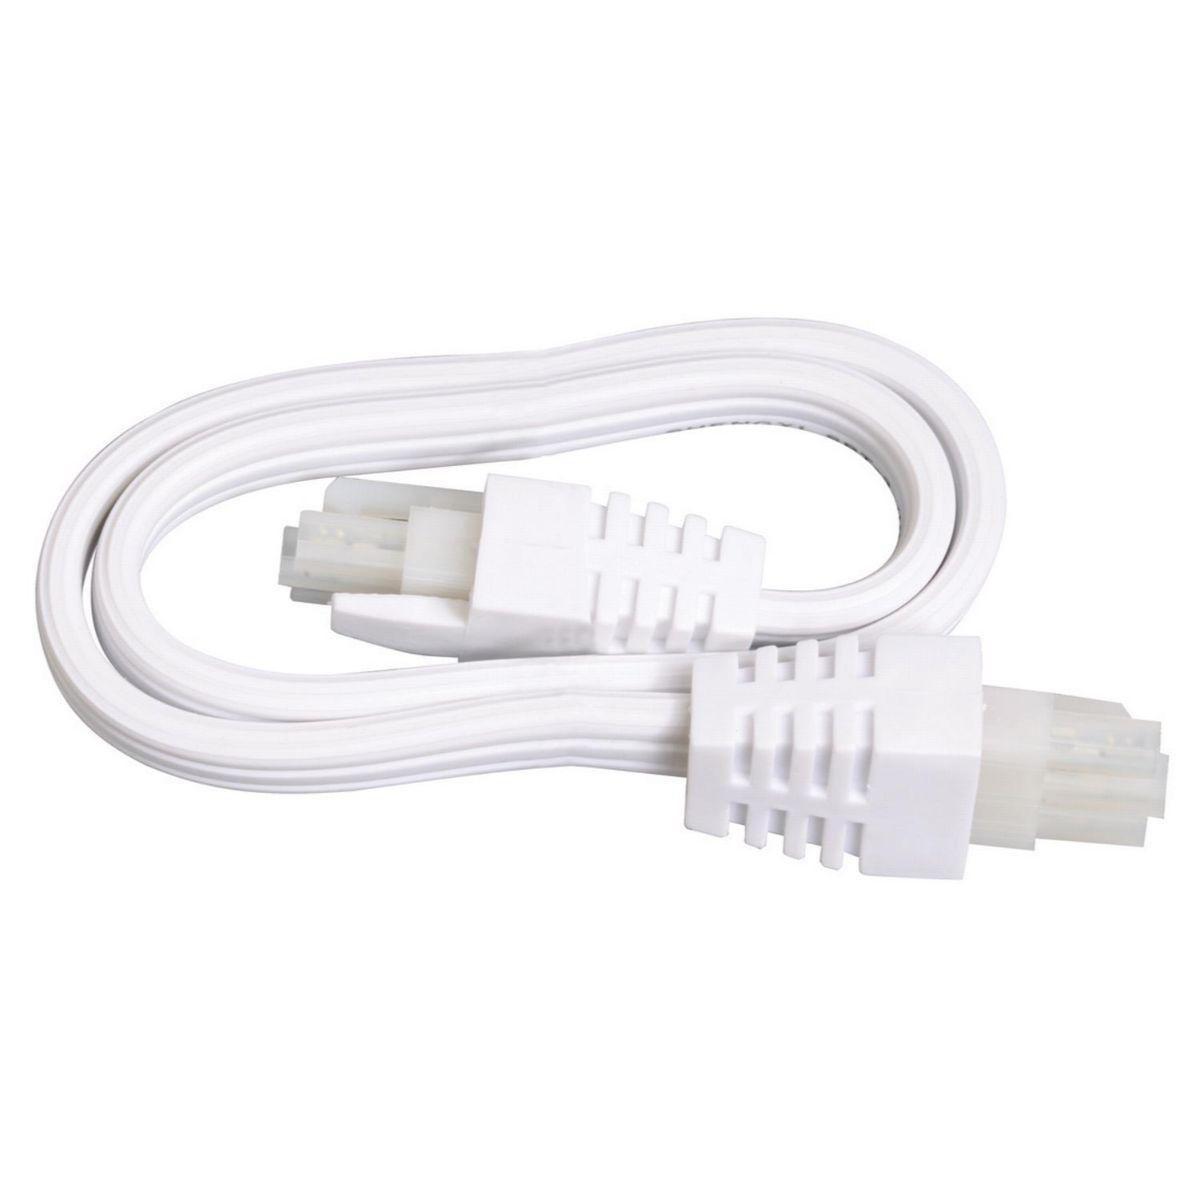 24in. Interconnect Cord for Elena Task Lighting, White